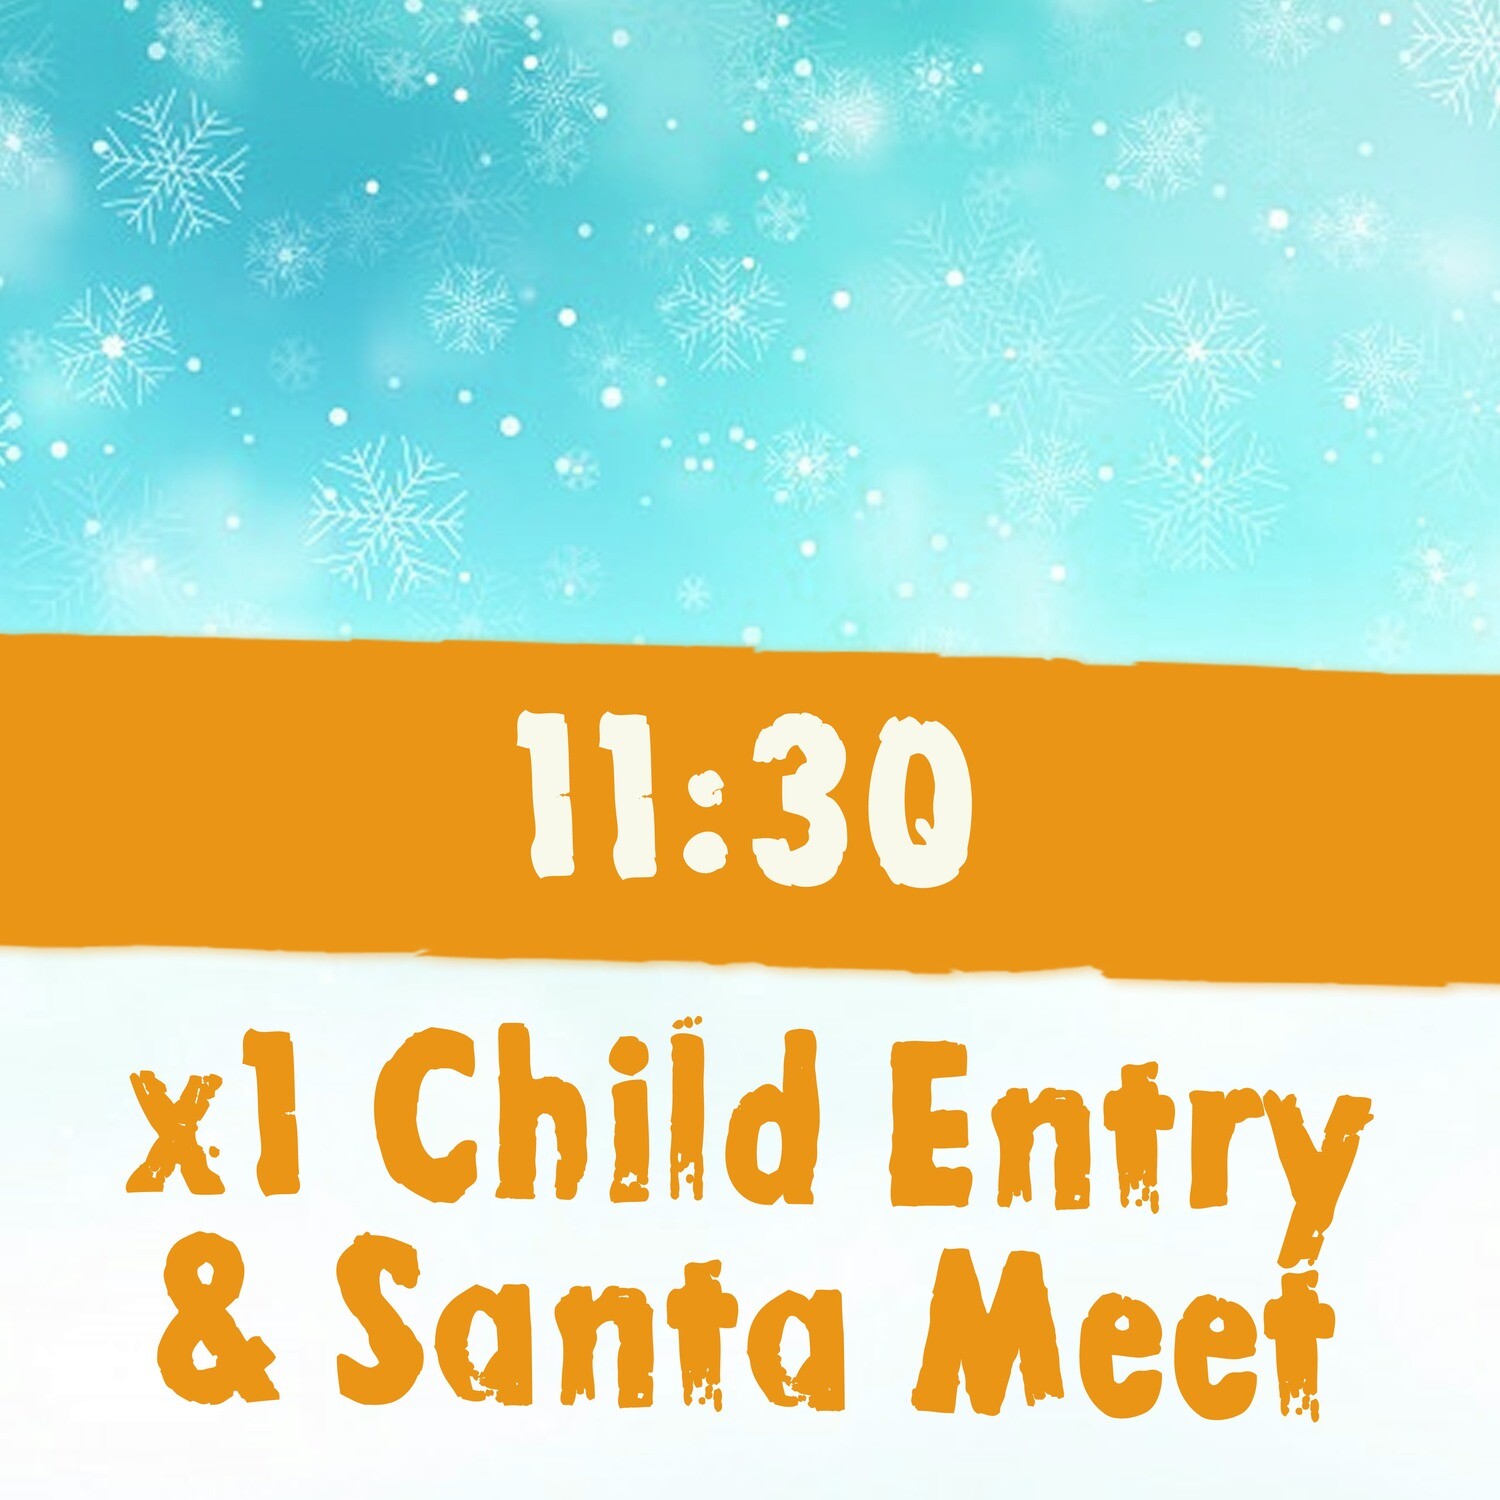 x1 Child Admission + Santa Meet 17th Dec / 11:30